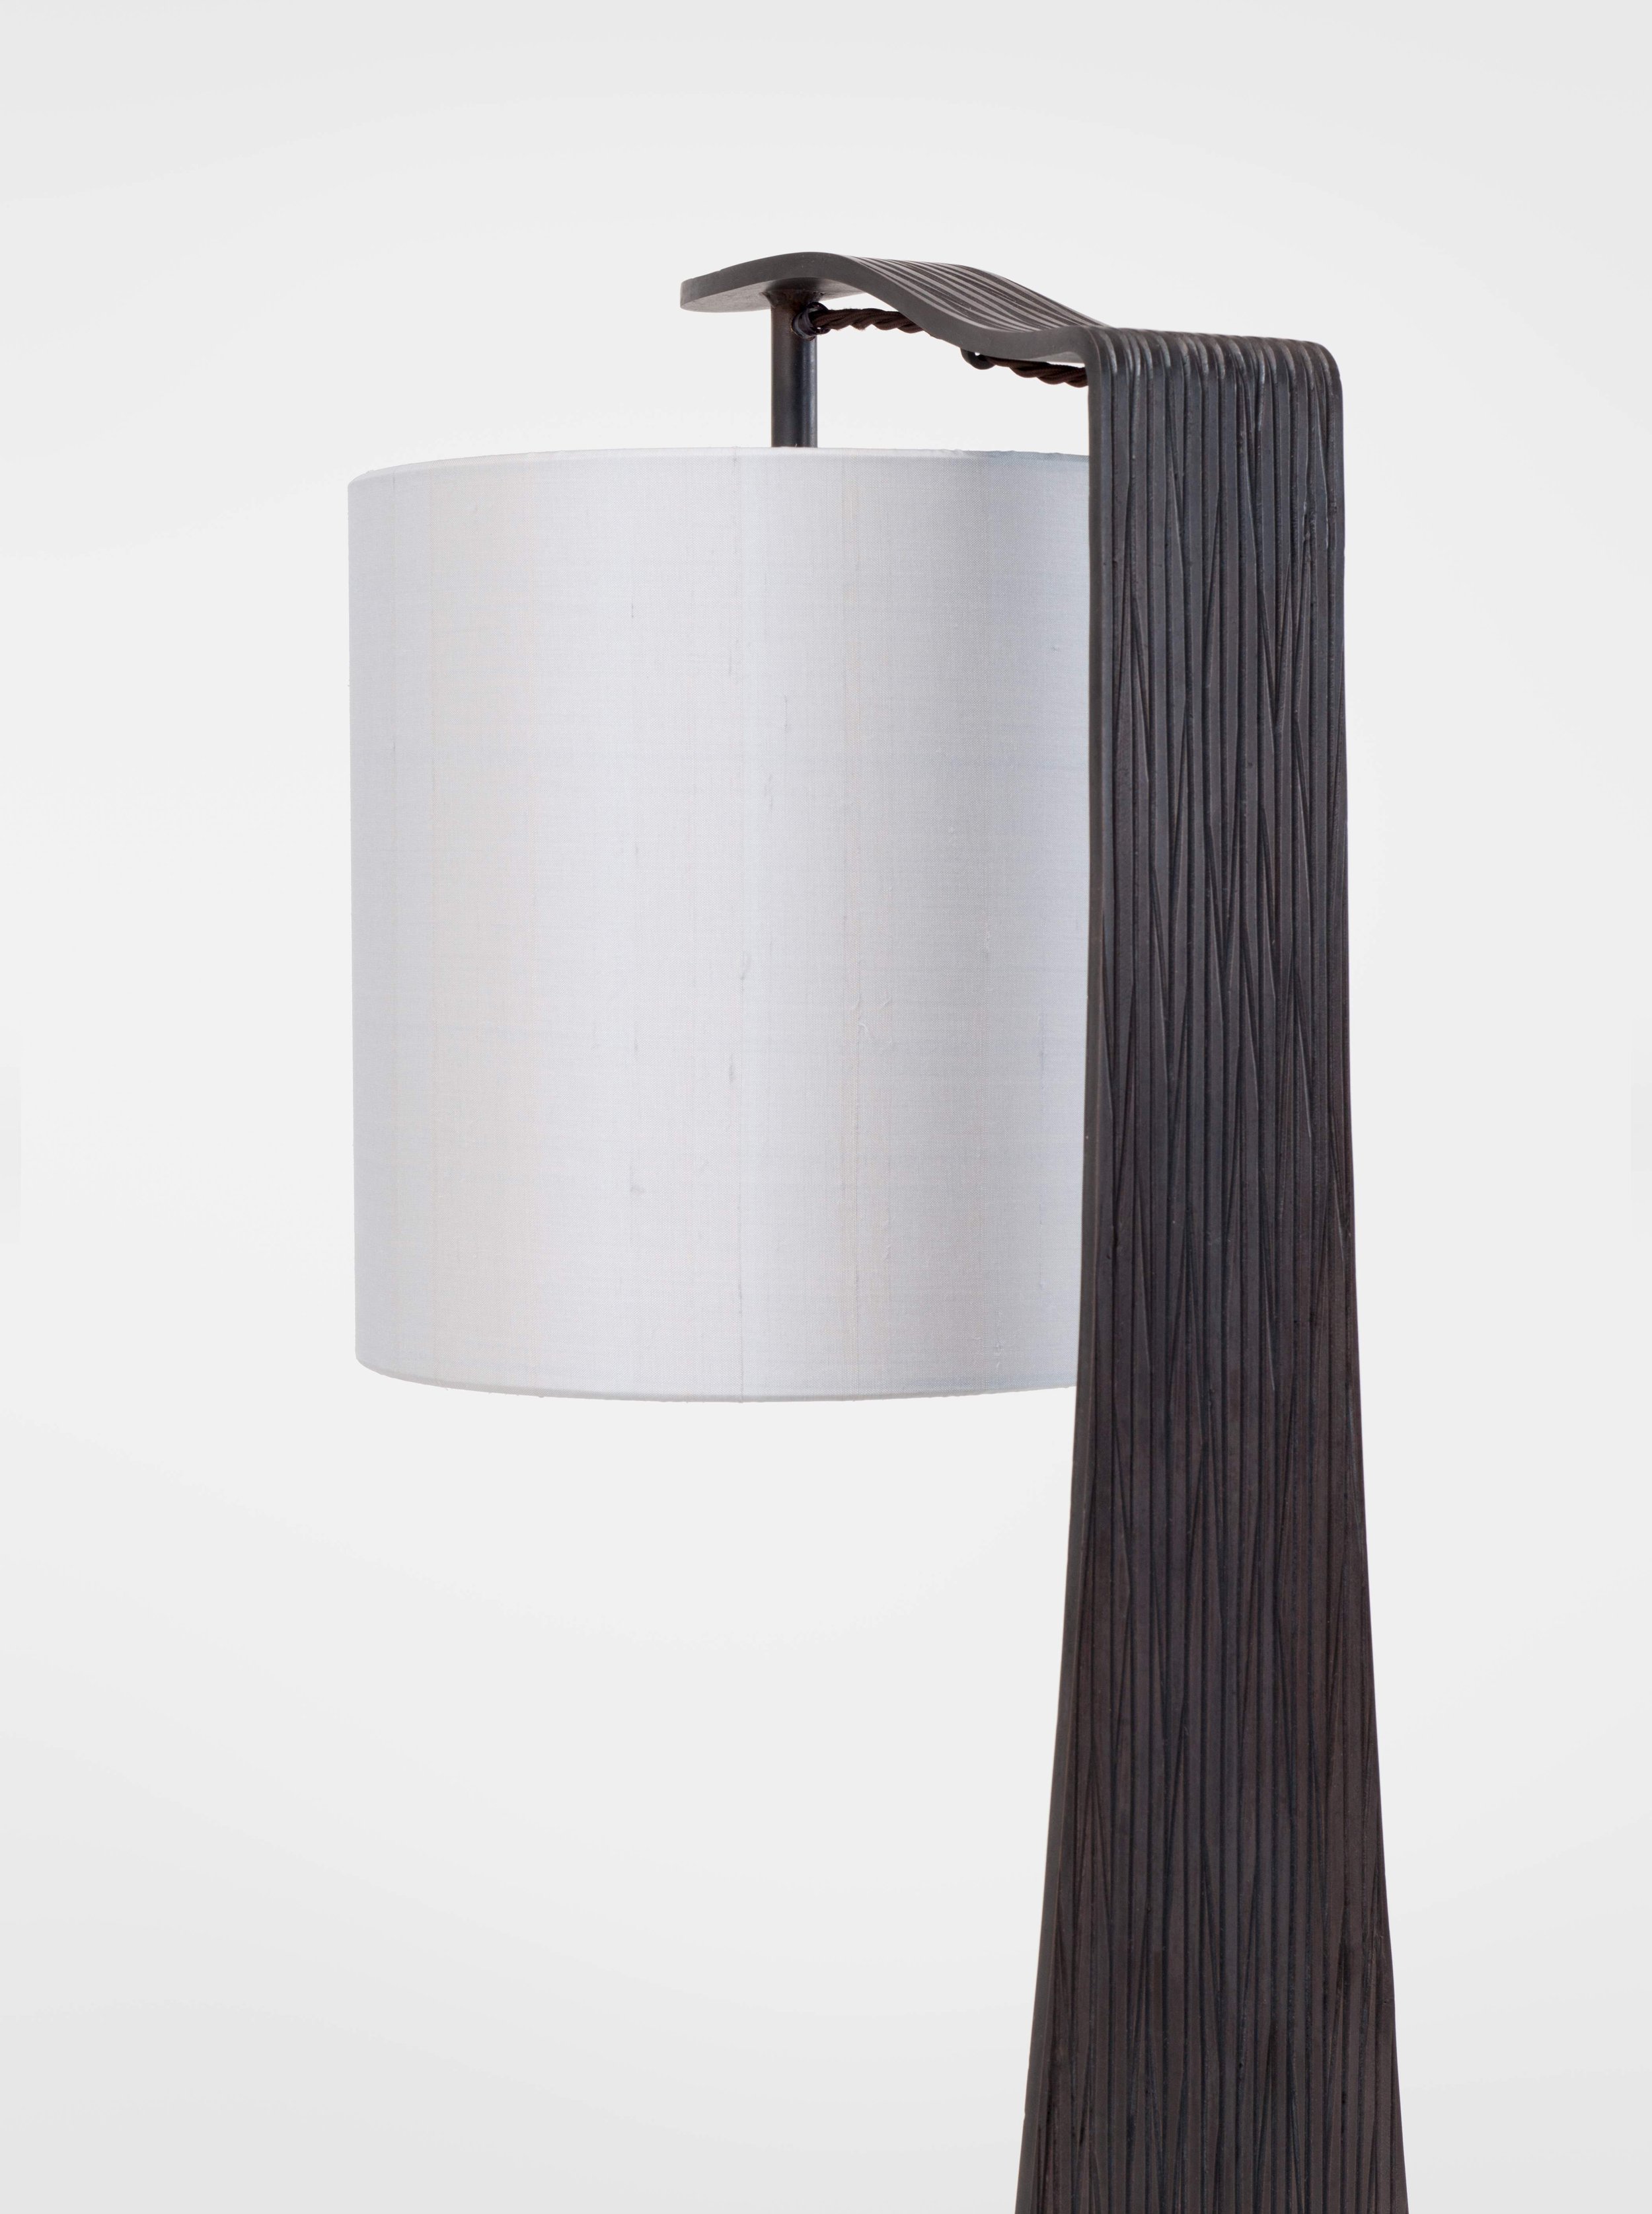 FJS Table Lamp 'Florence' 3 (Detail).jpg